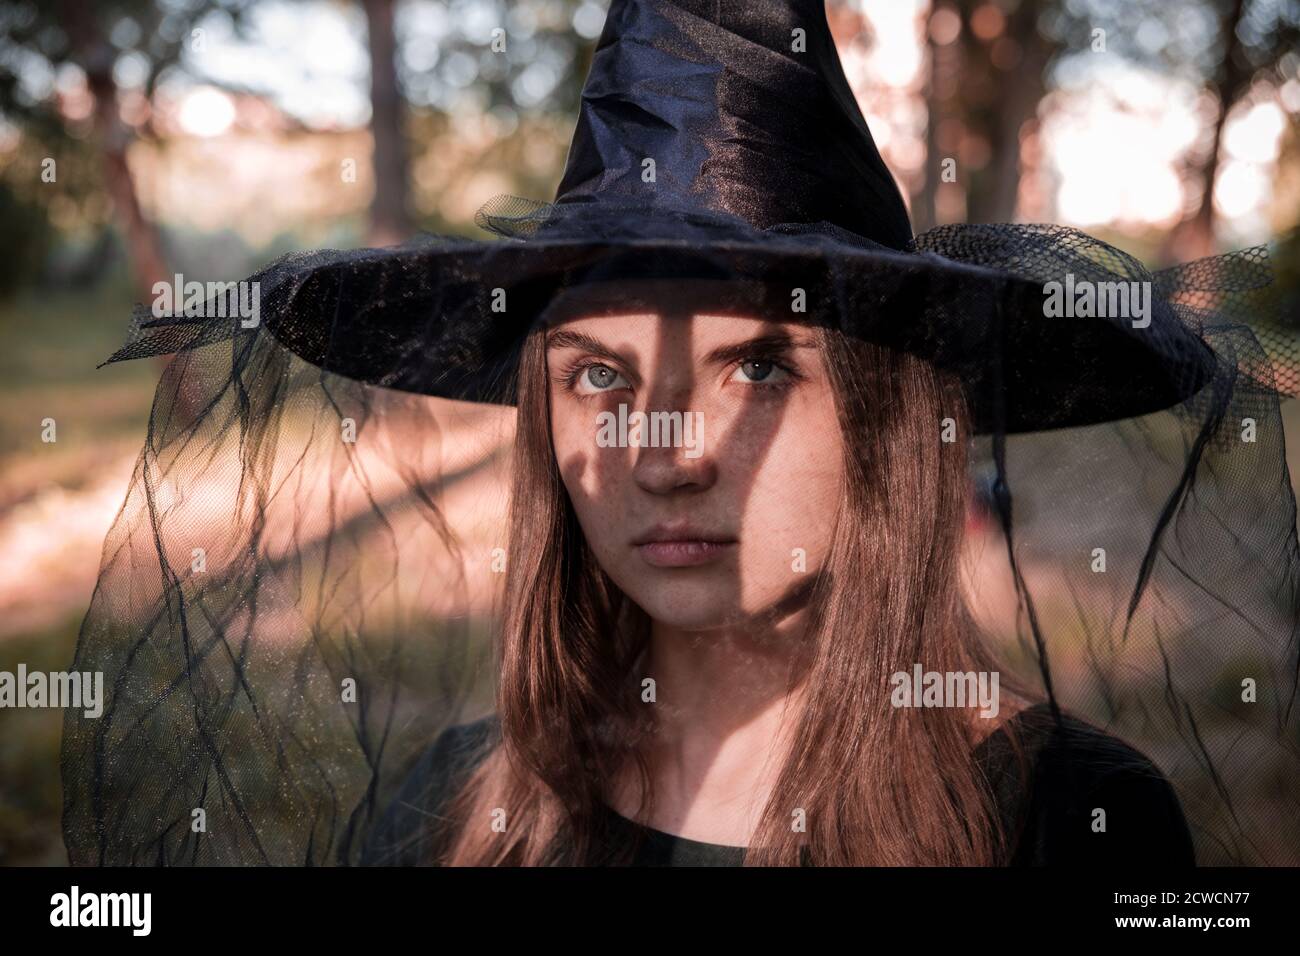 Woman standing in forest gothic -Fotos und -Bildmaterial in hoher